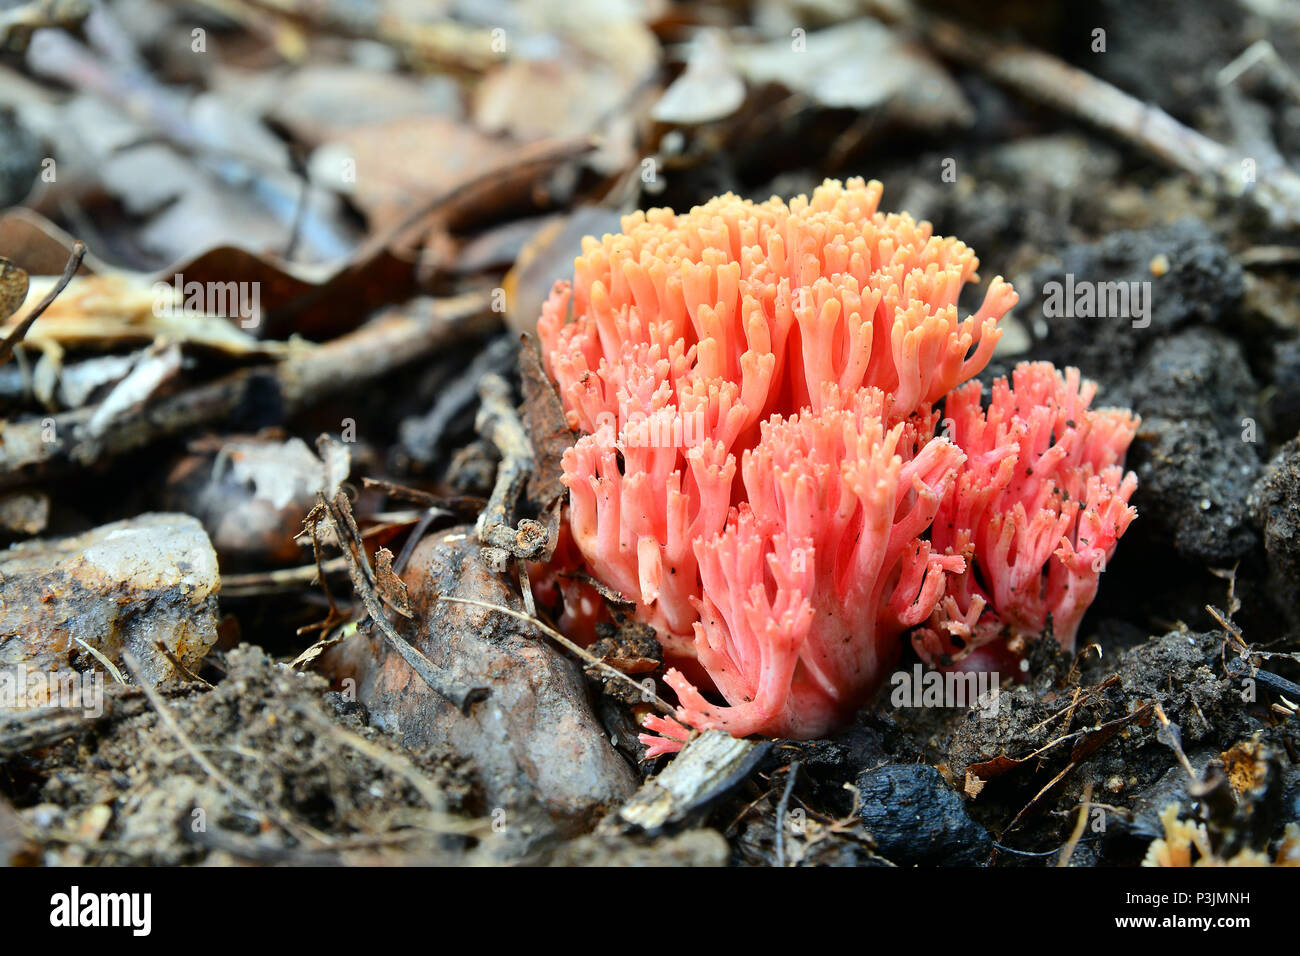 ramaria botrytis mushroom cluster on the ground Stock Photo